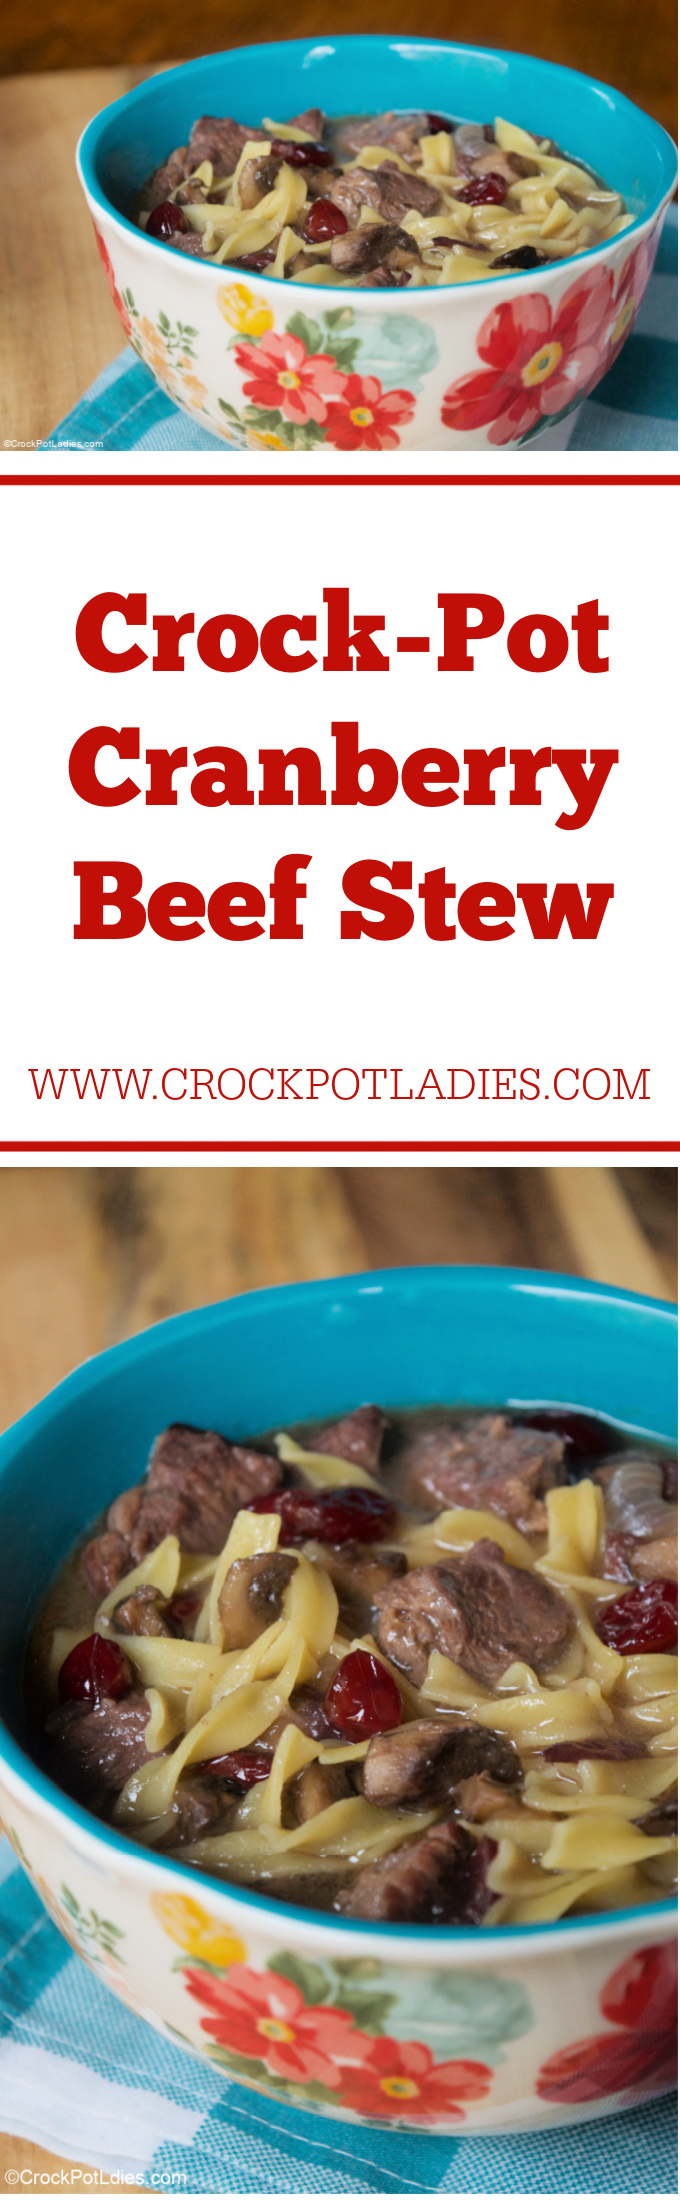 Crock-Pot Cranberry Beef Stew